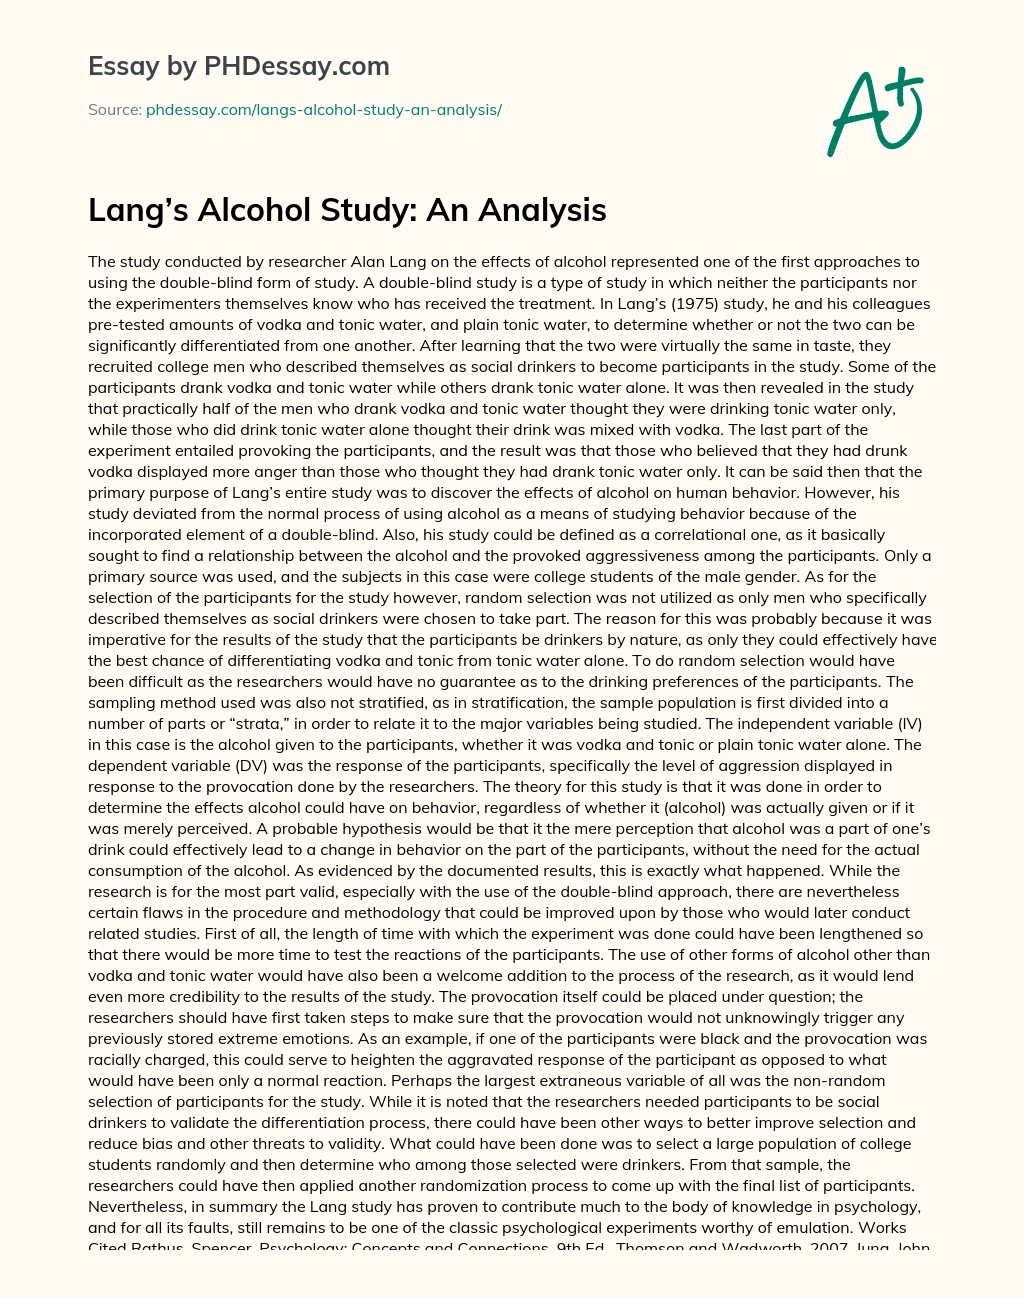 Lang’s Alcohol Study: An Analysis essay